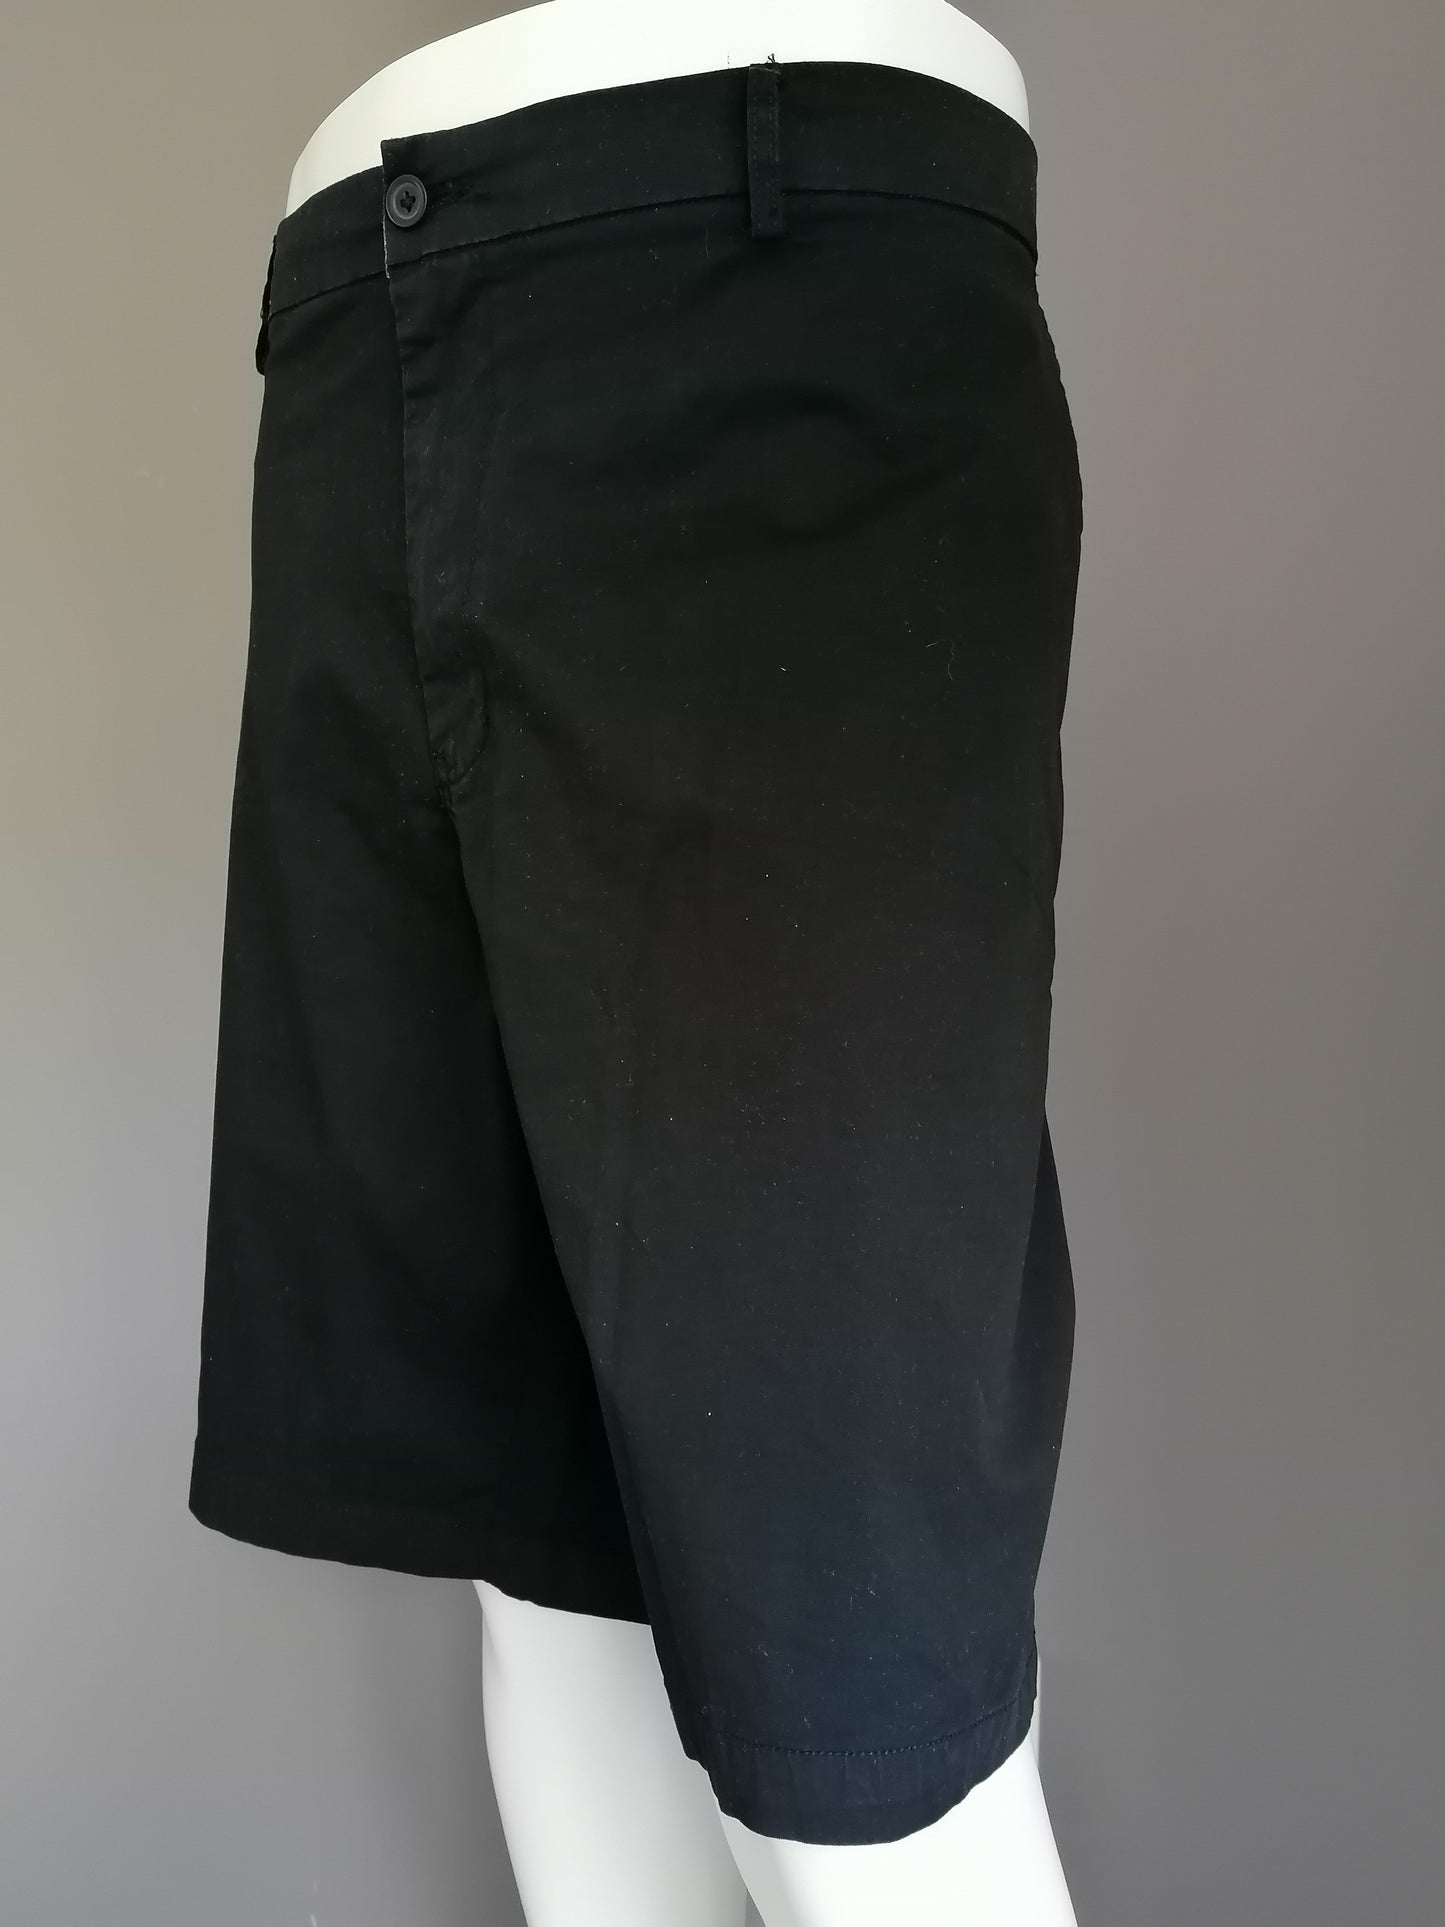 Capsule Men Shorts. Color negro. Tamaño W54. Estirar